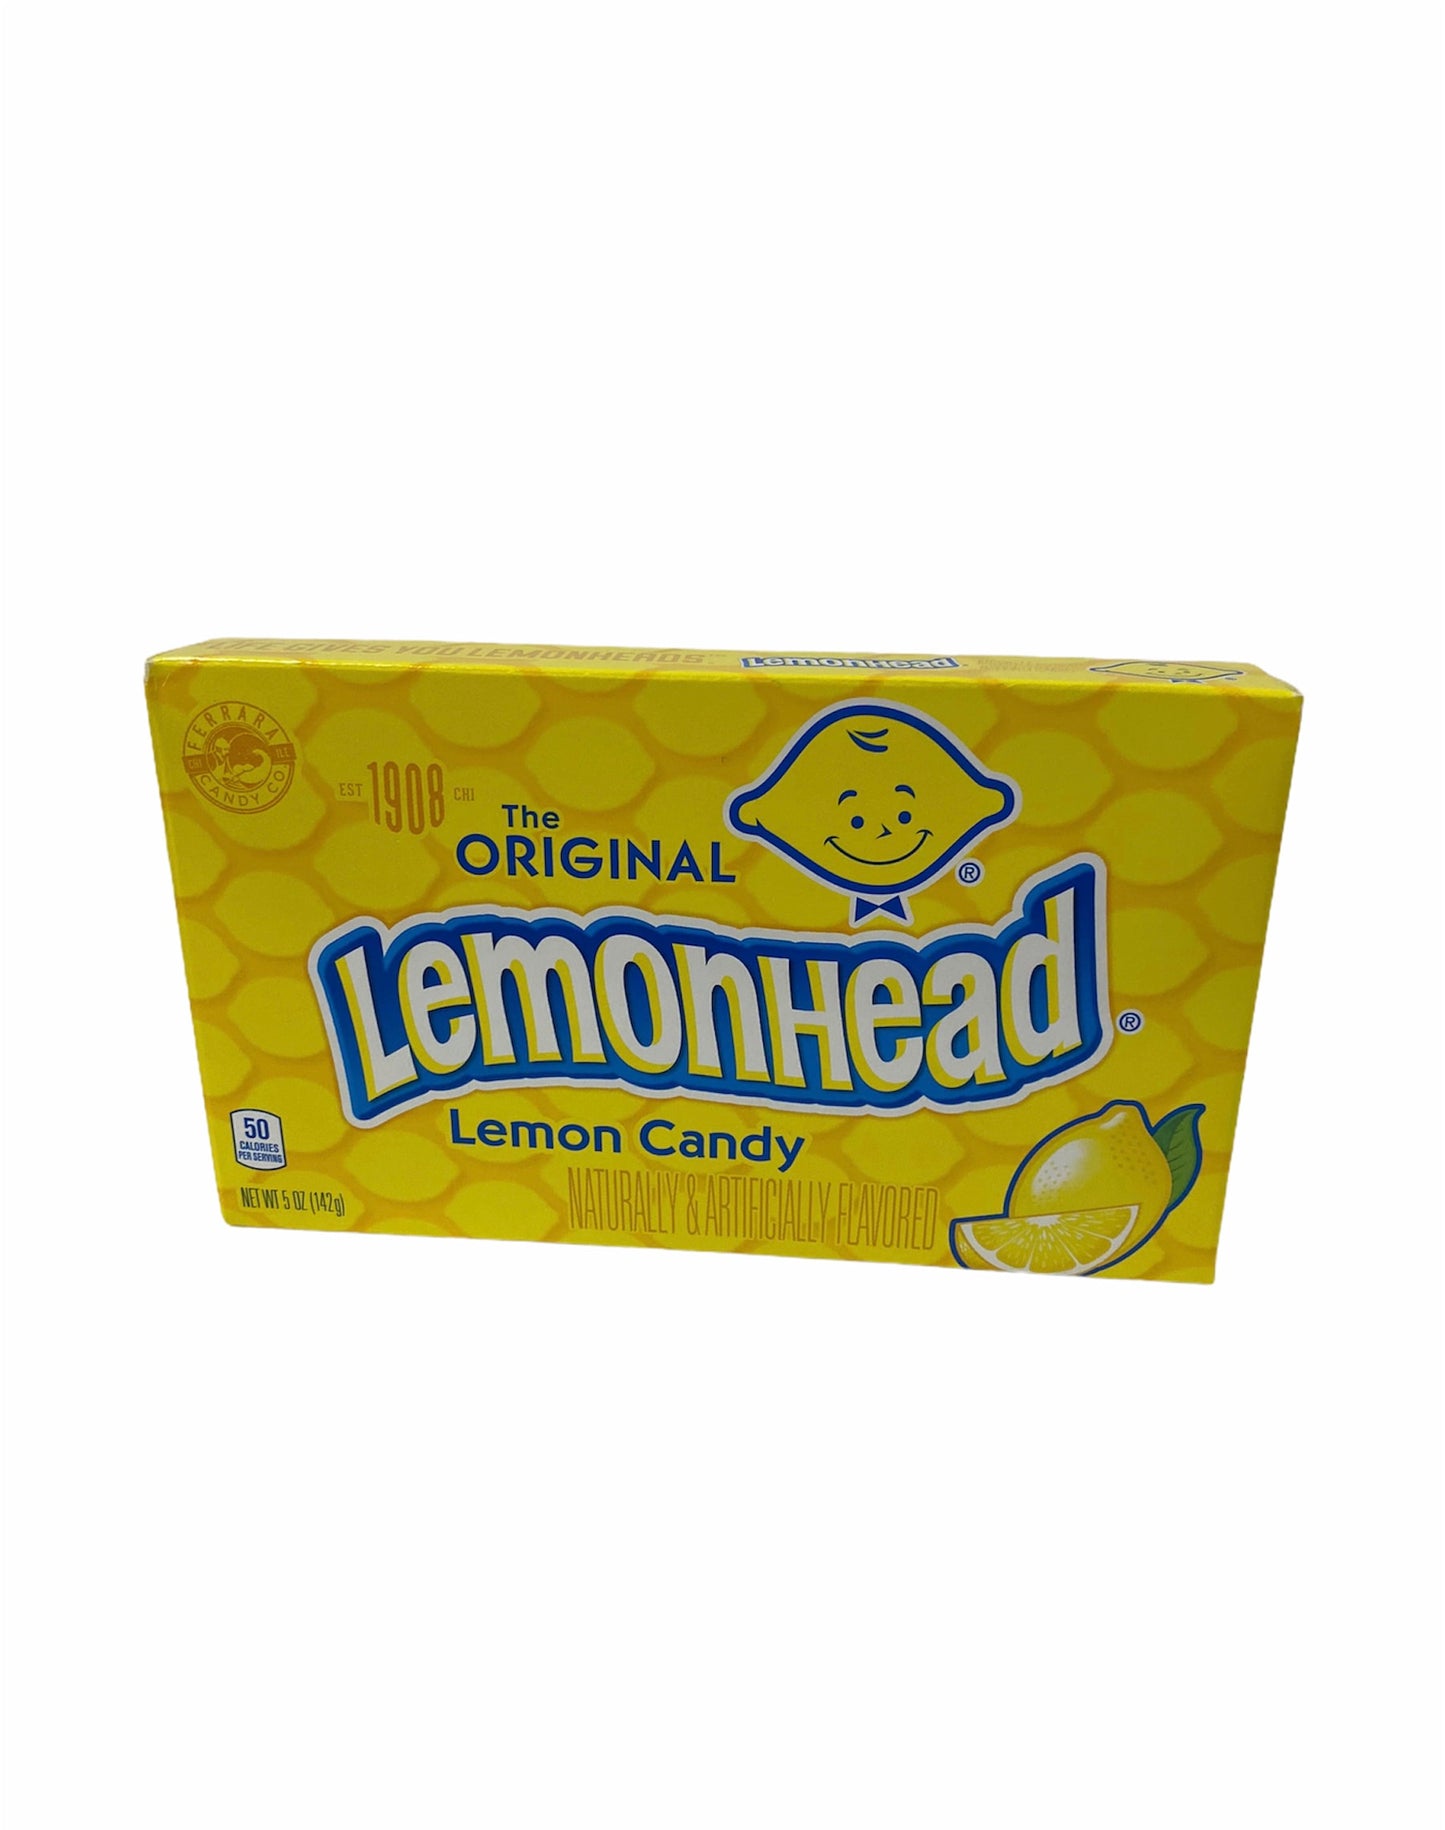 The Original Lemonhead Lemon Candy Theatre Box - 142g